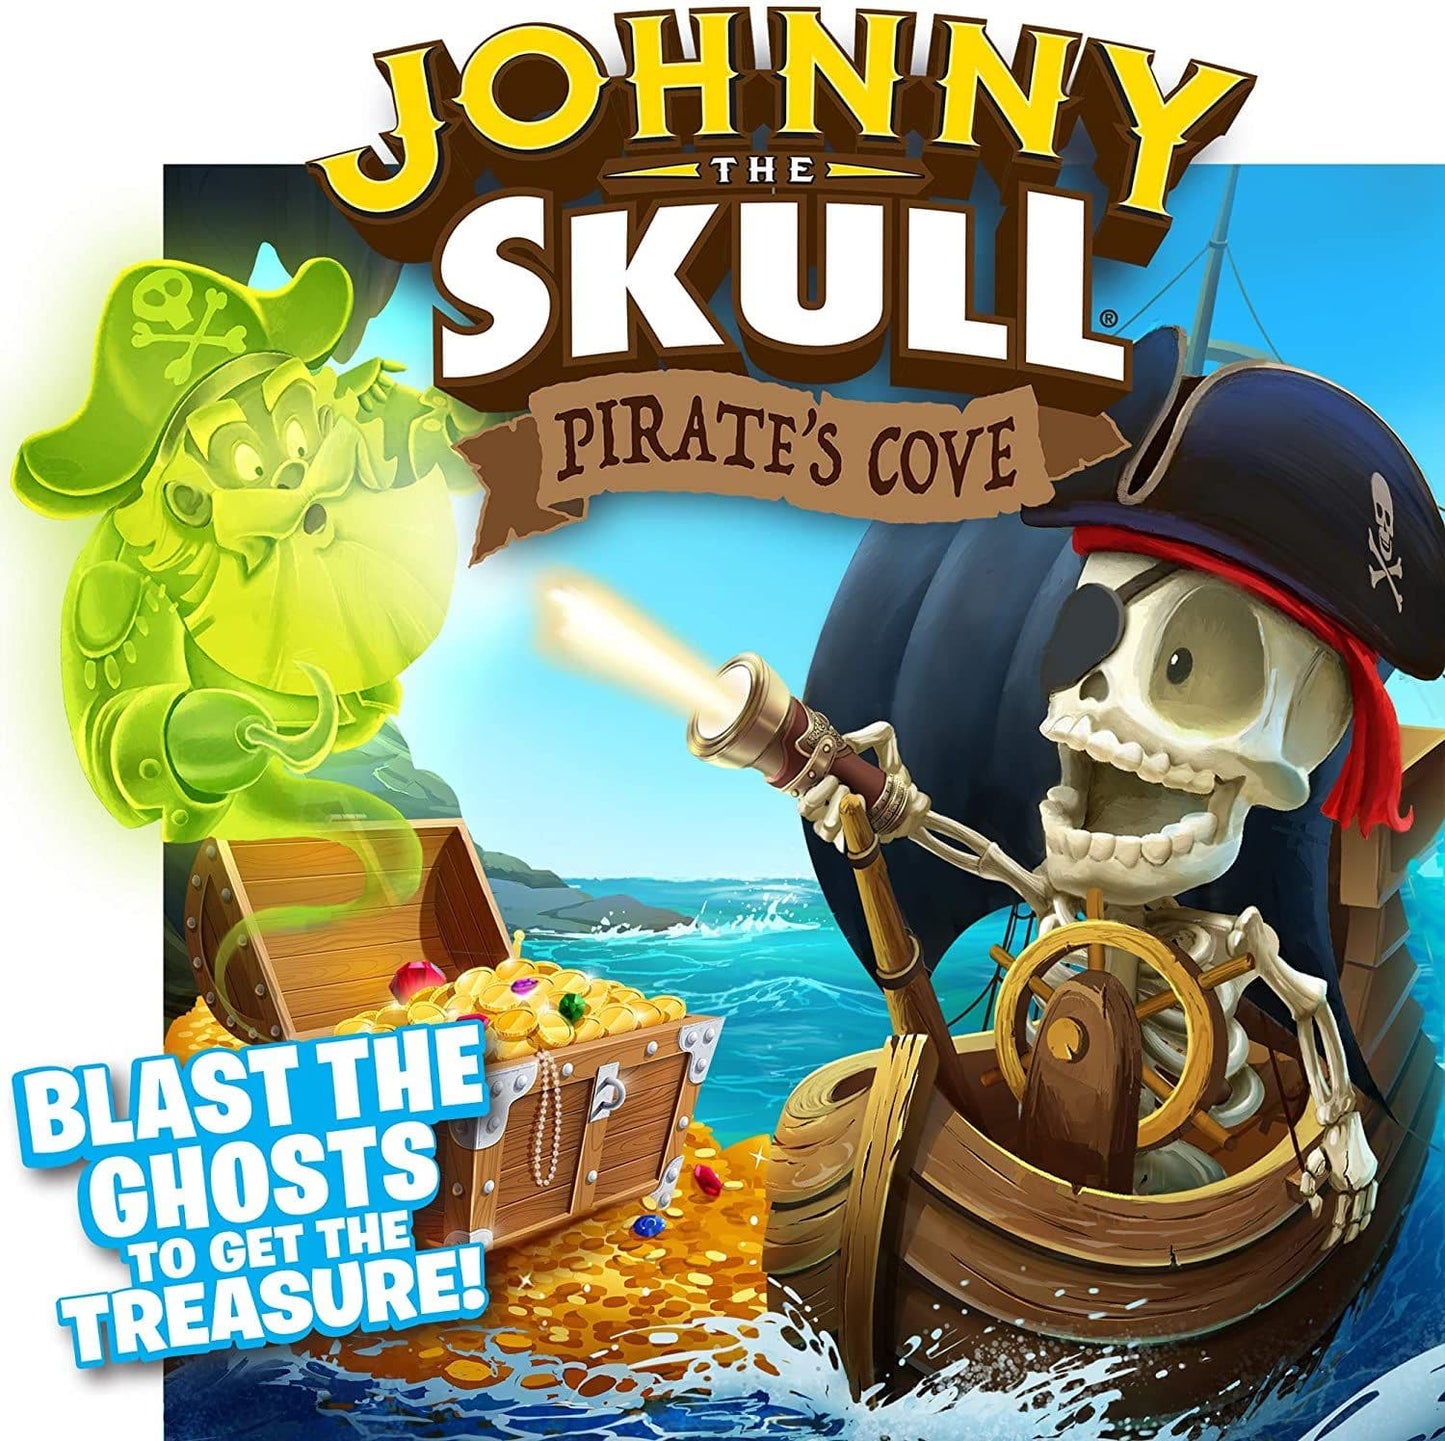 Goliath Johnny The Skull Pirate's Cove Treasure Kids Game